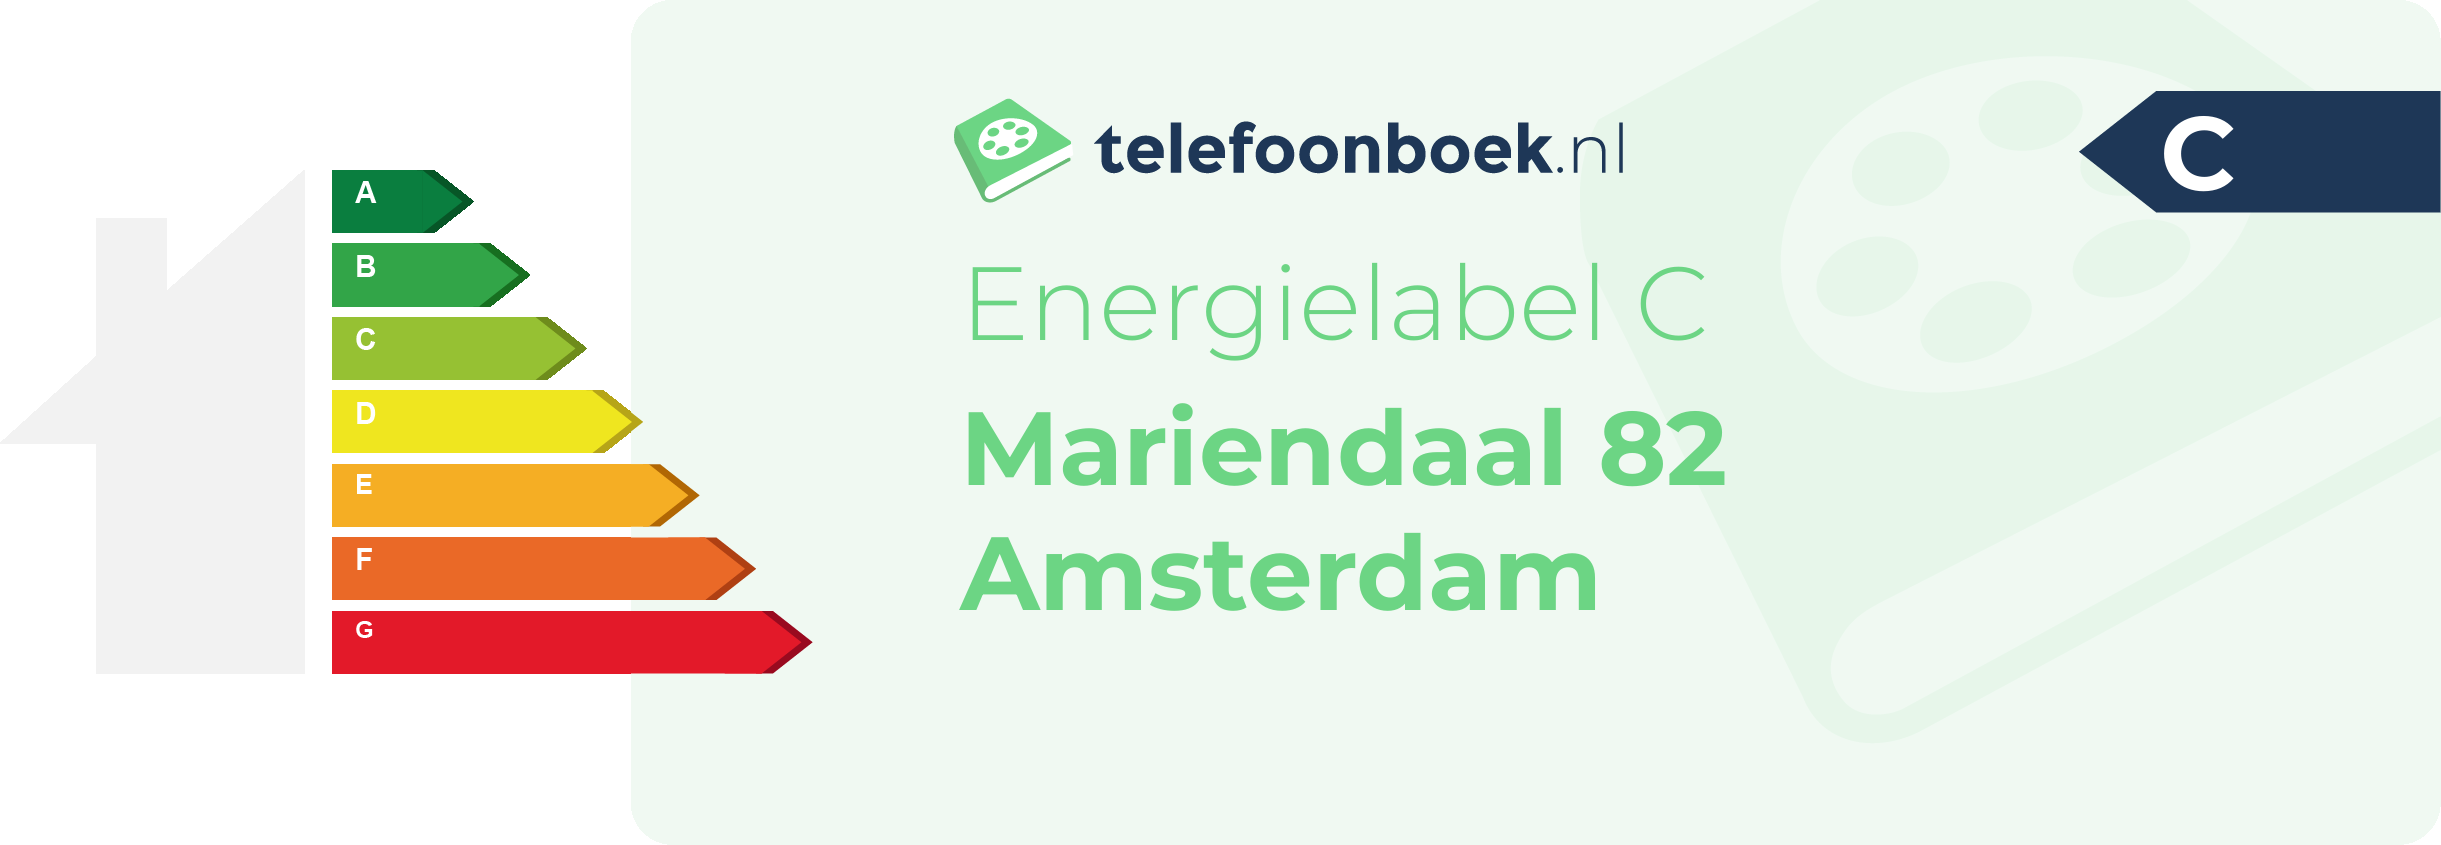 Energielabel Mariendaal 82 Amsterdam